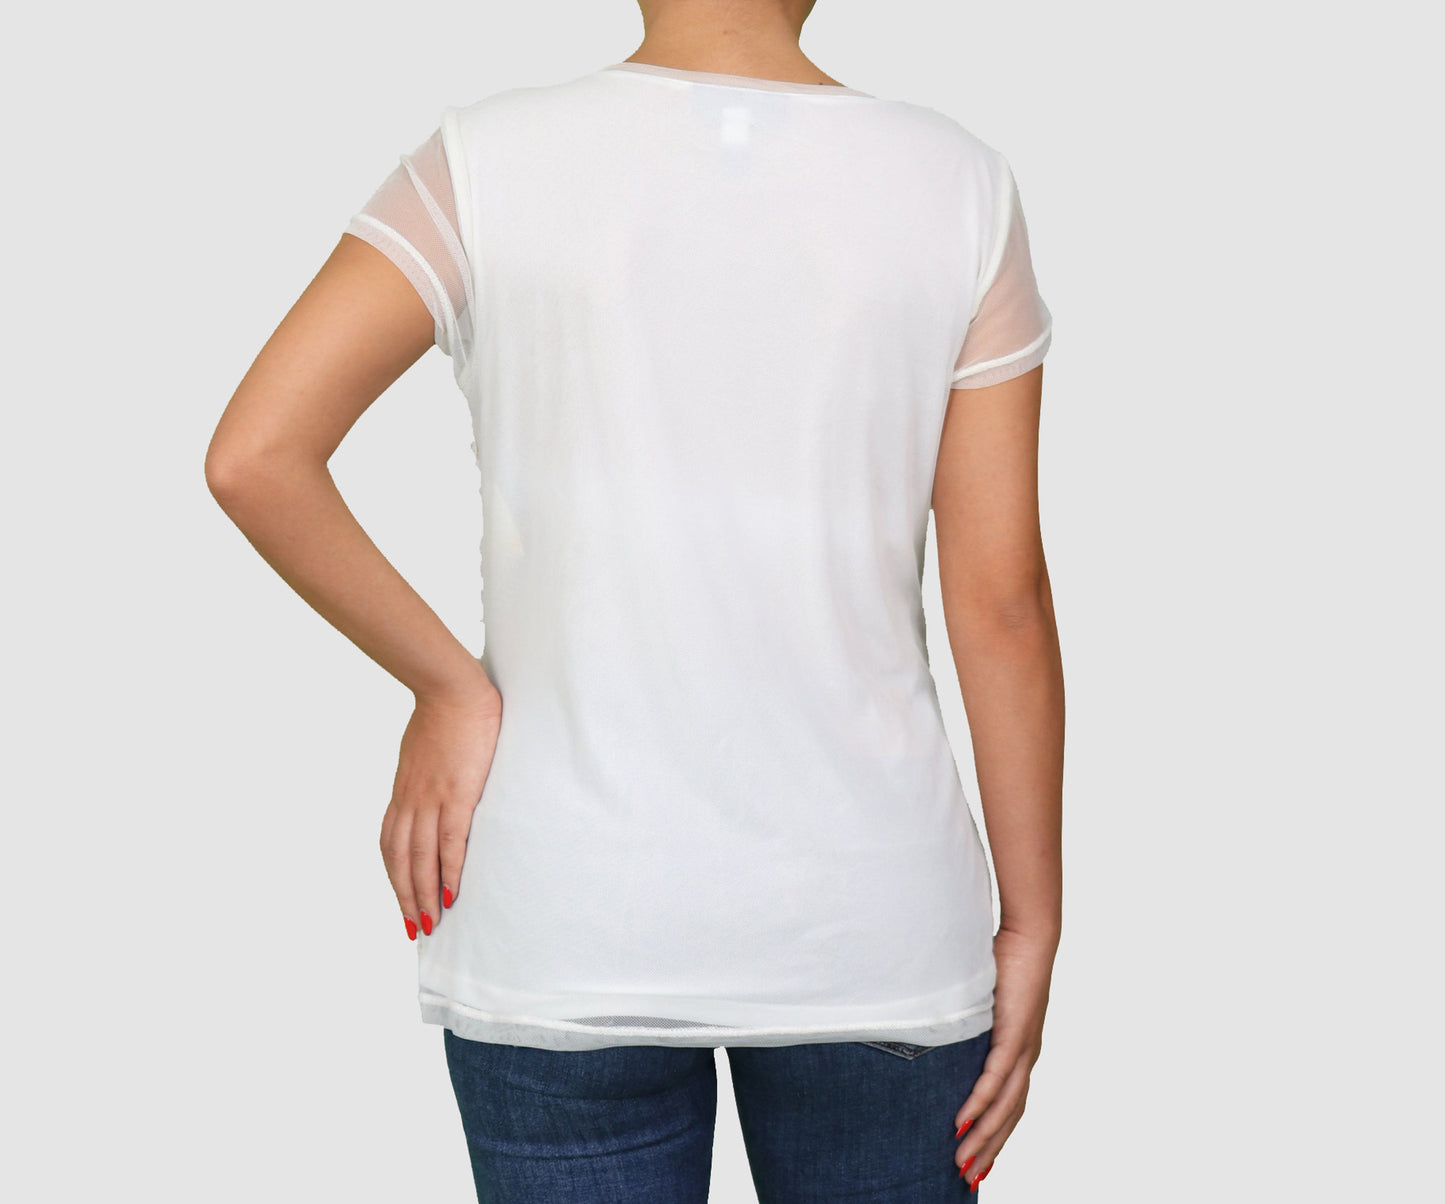 INC INTERNATIONAL CONCEPTS Womens Tops Medium / White/ Gold Short Sleeve Top